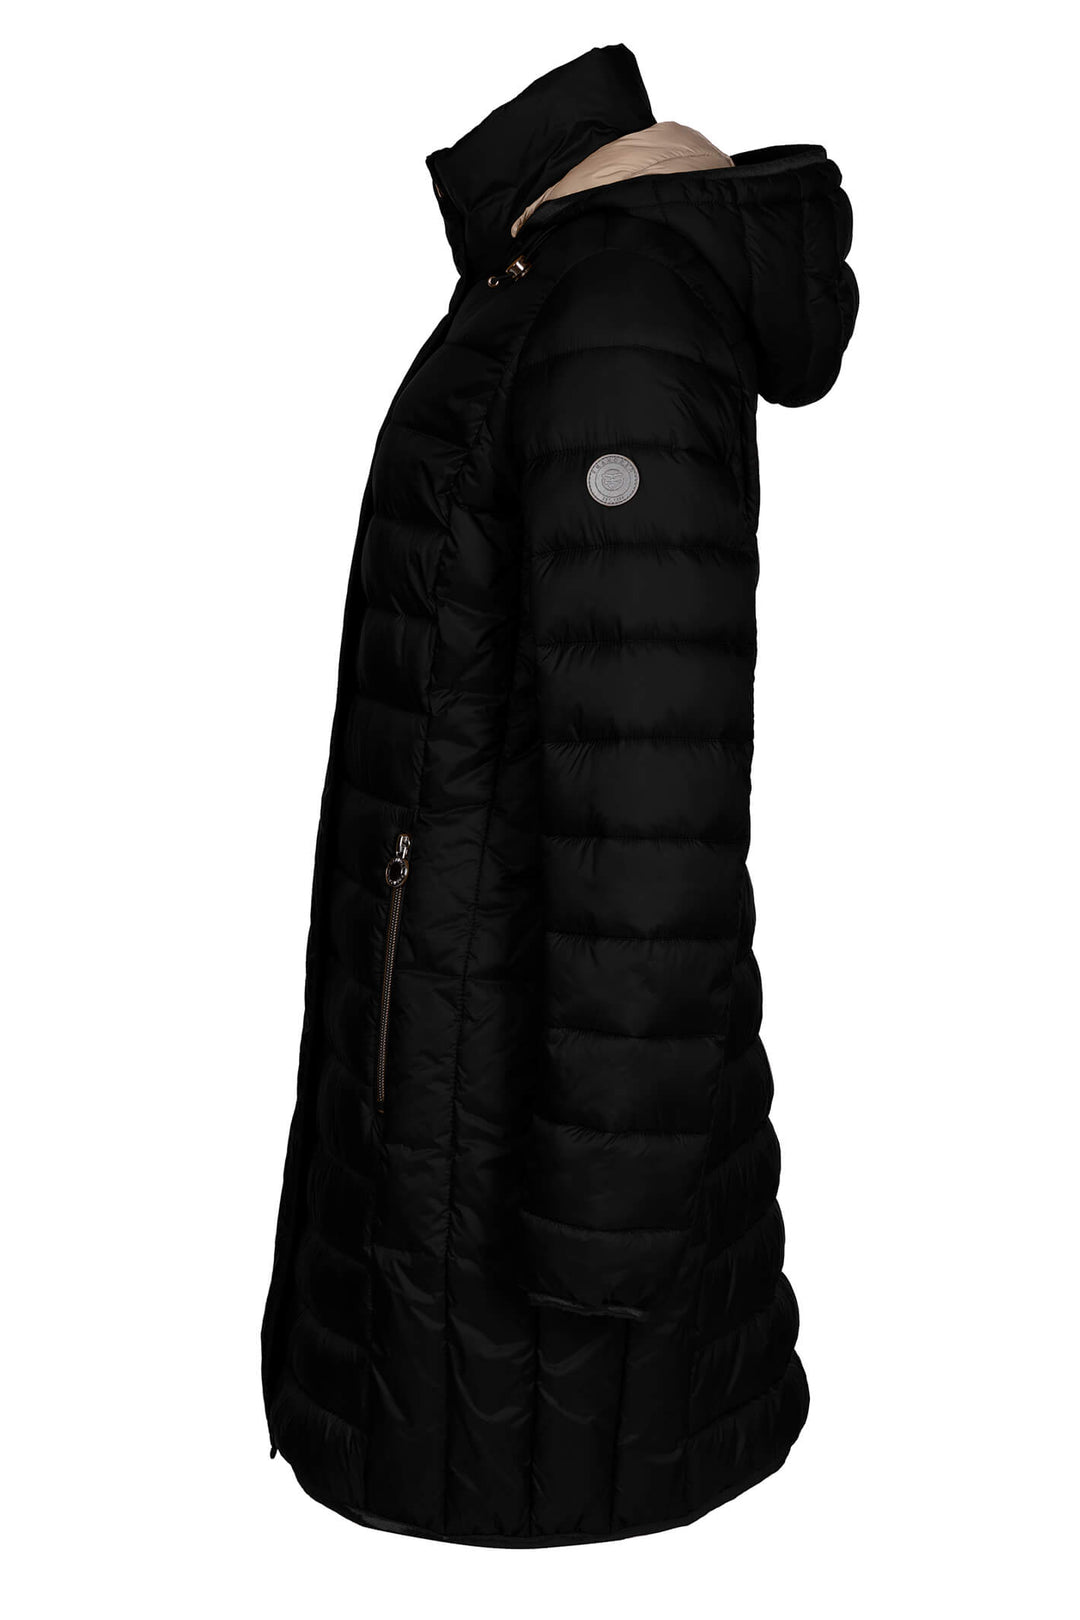 Fransen 327-588-90 Black Zip Front Padded Coat With Hood - Dotique